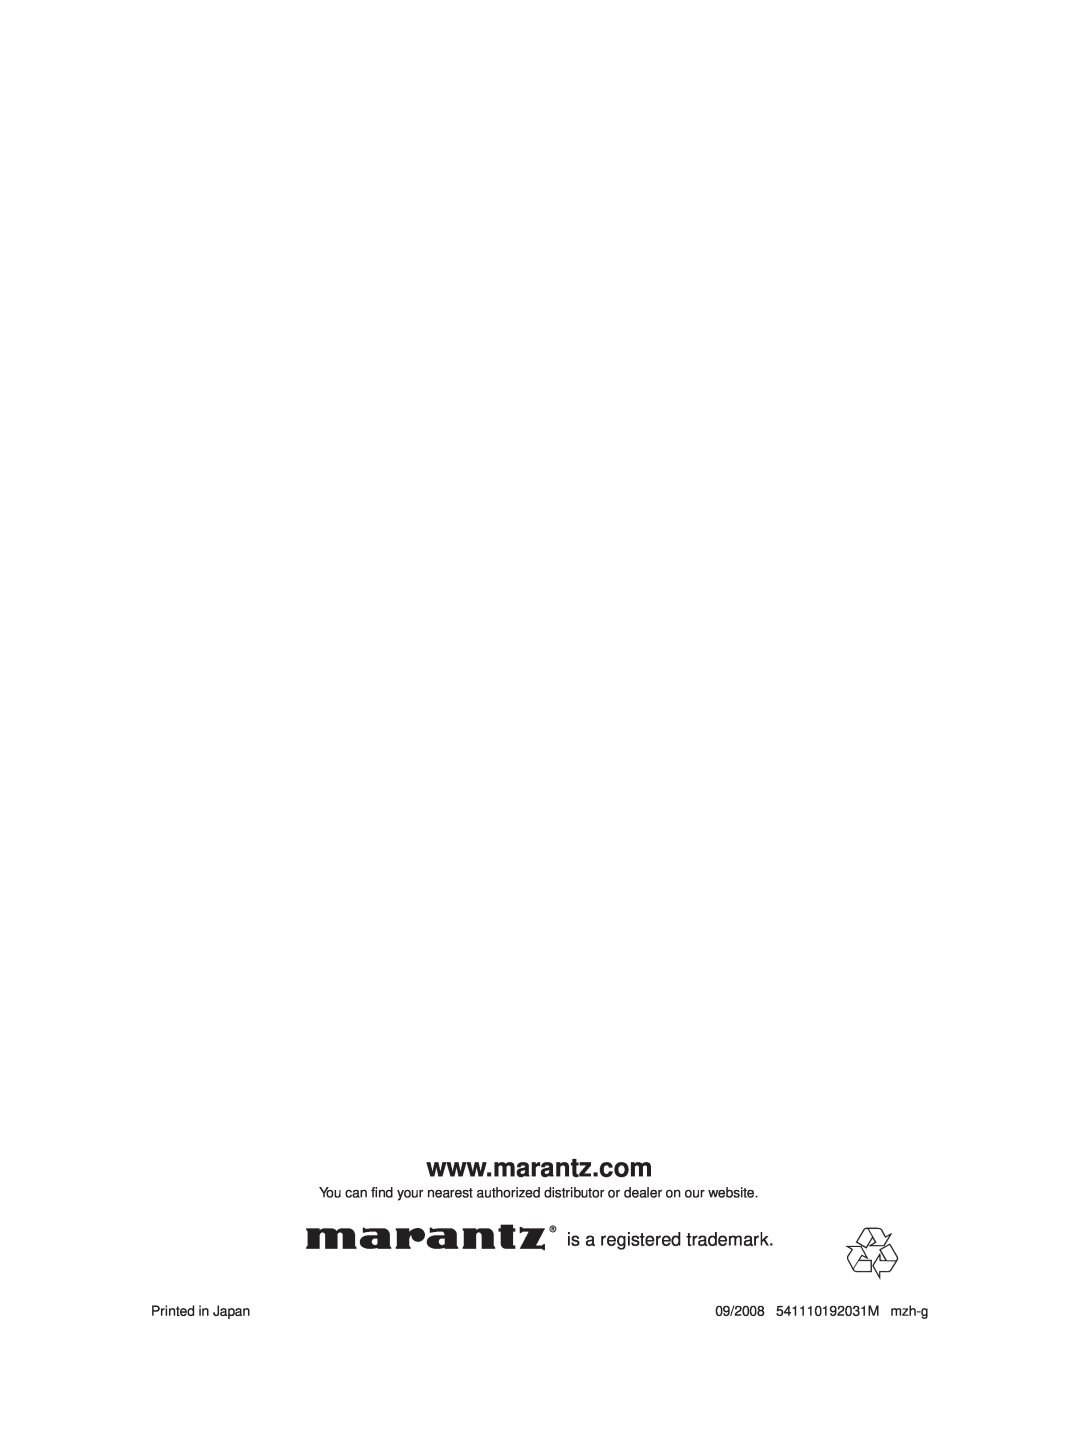 Marantz SA-15S2 manual is a registered trademark 